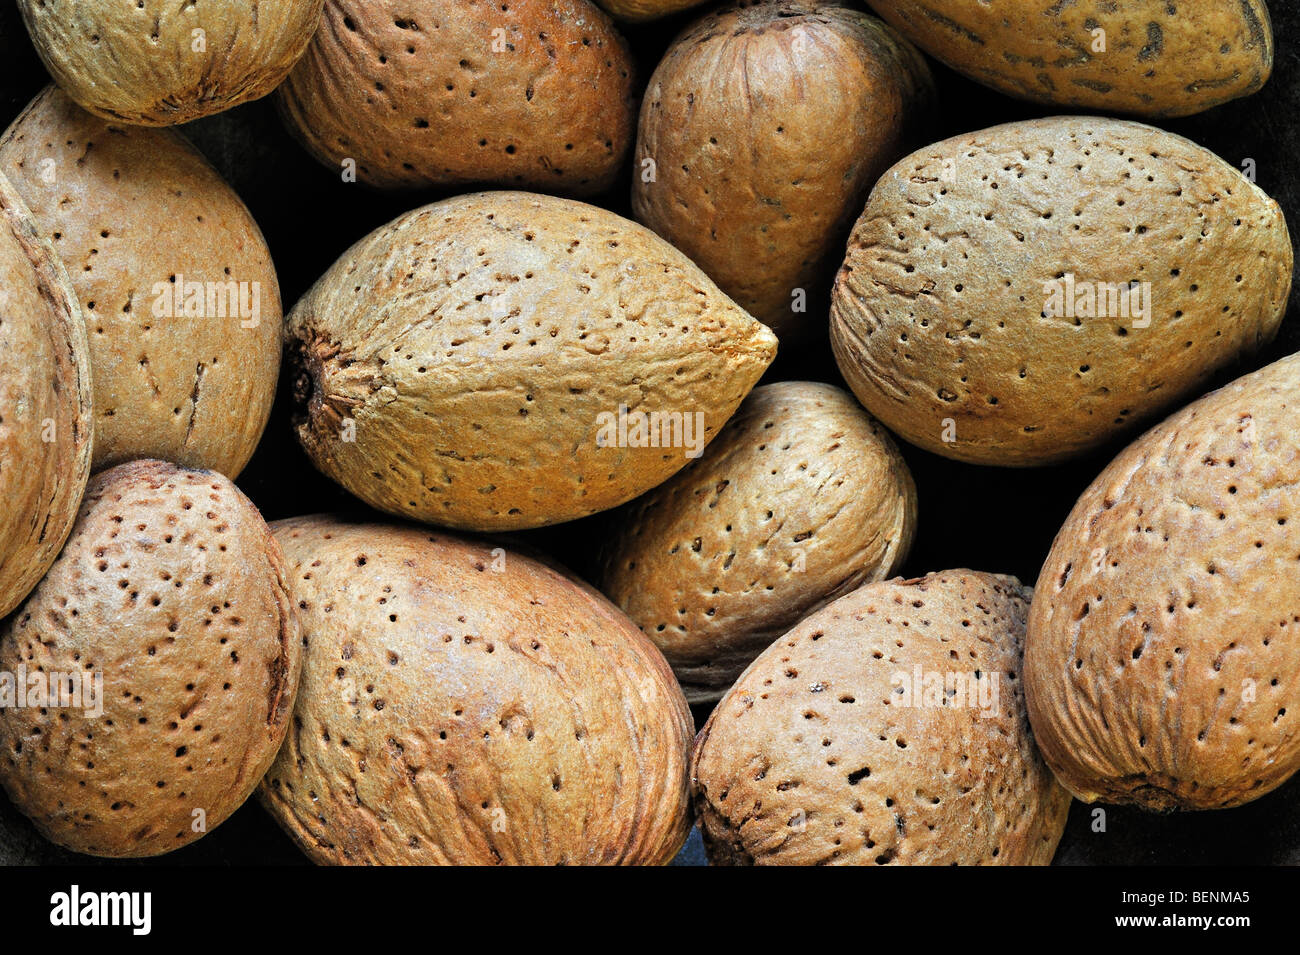 Harvested unshelled almond nuts (Prunus dulcis / Prunus amygdalus) in shell Stock Photo